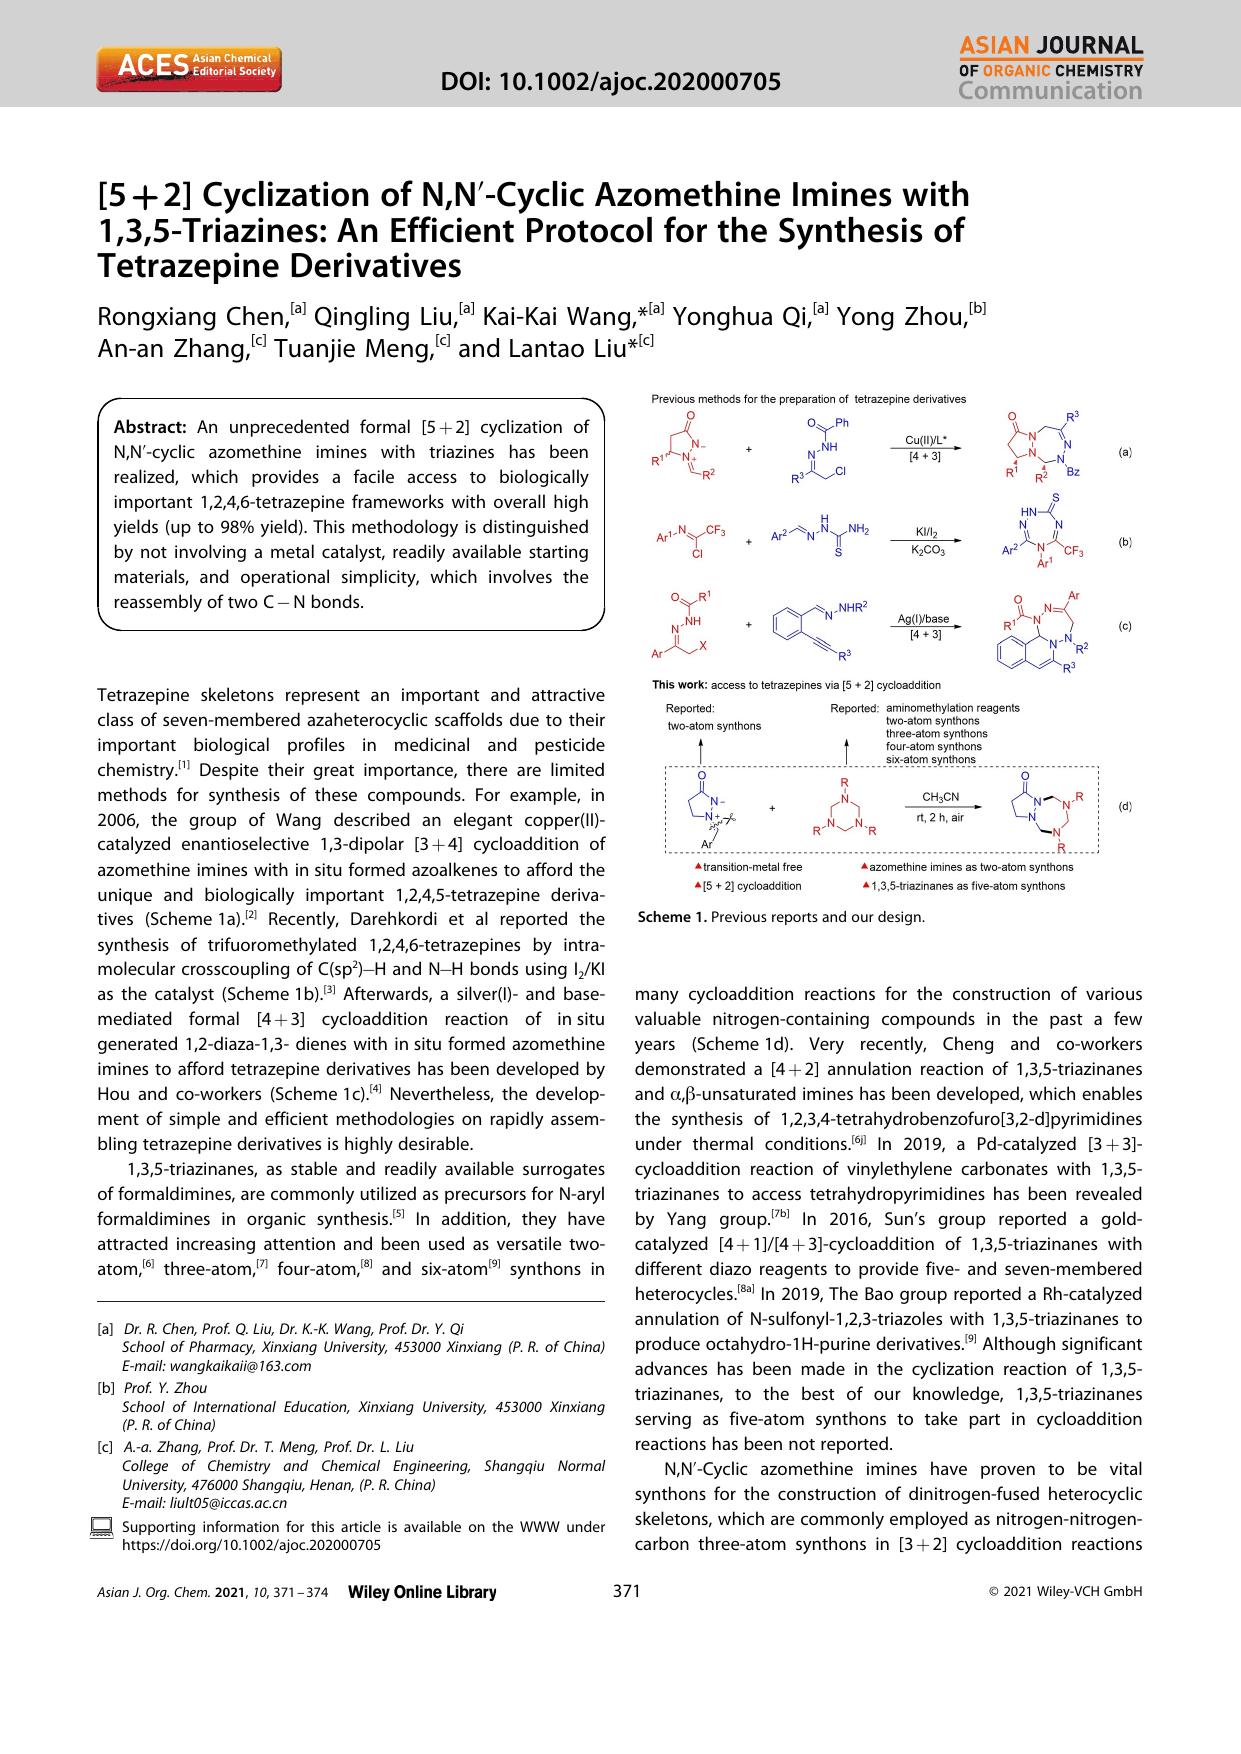 [5+2] Cyclization of N,Nâ²âCyclic Azomethine Imines with 1,3,5âTriazines: An Efficient Protocol for the Synthesis of Tetrazepine Derivatives by Unknown